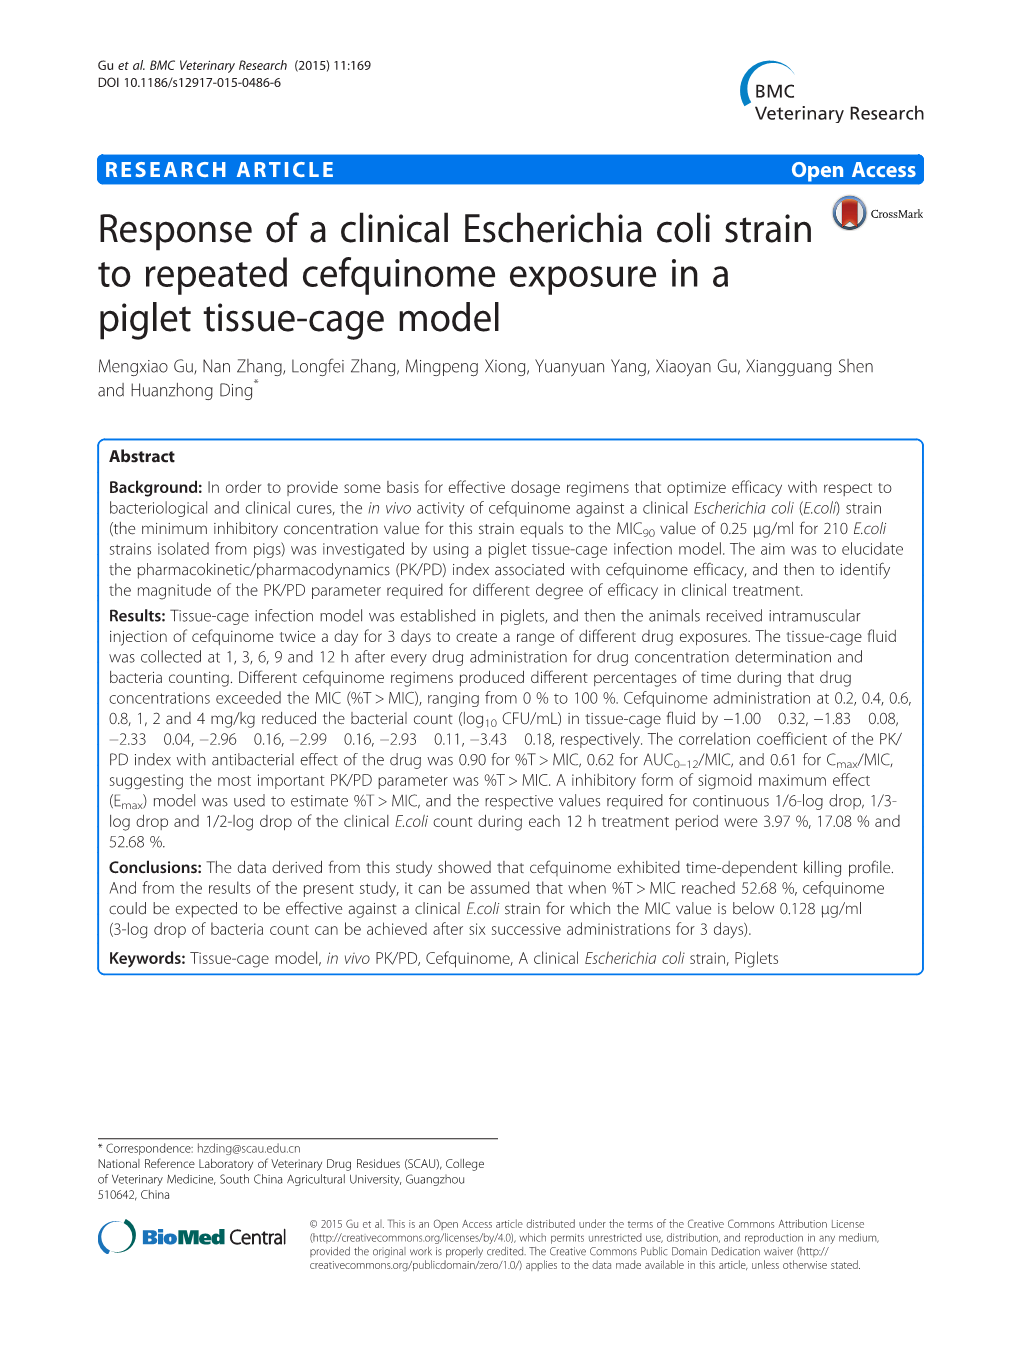 Response of a Clinical Escherichia Coli Strain to Repeated Cefquinome